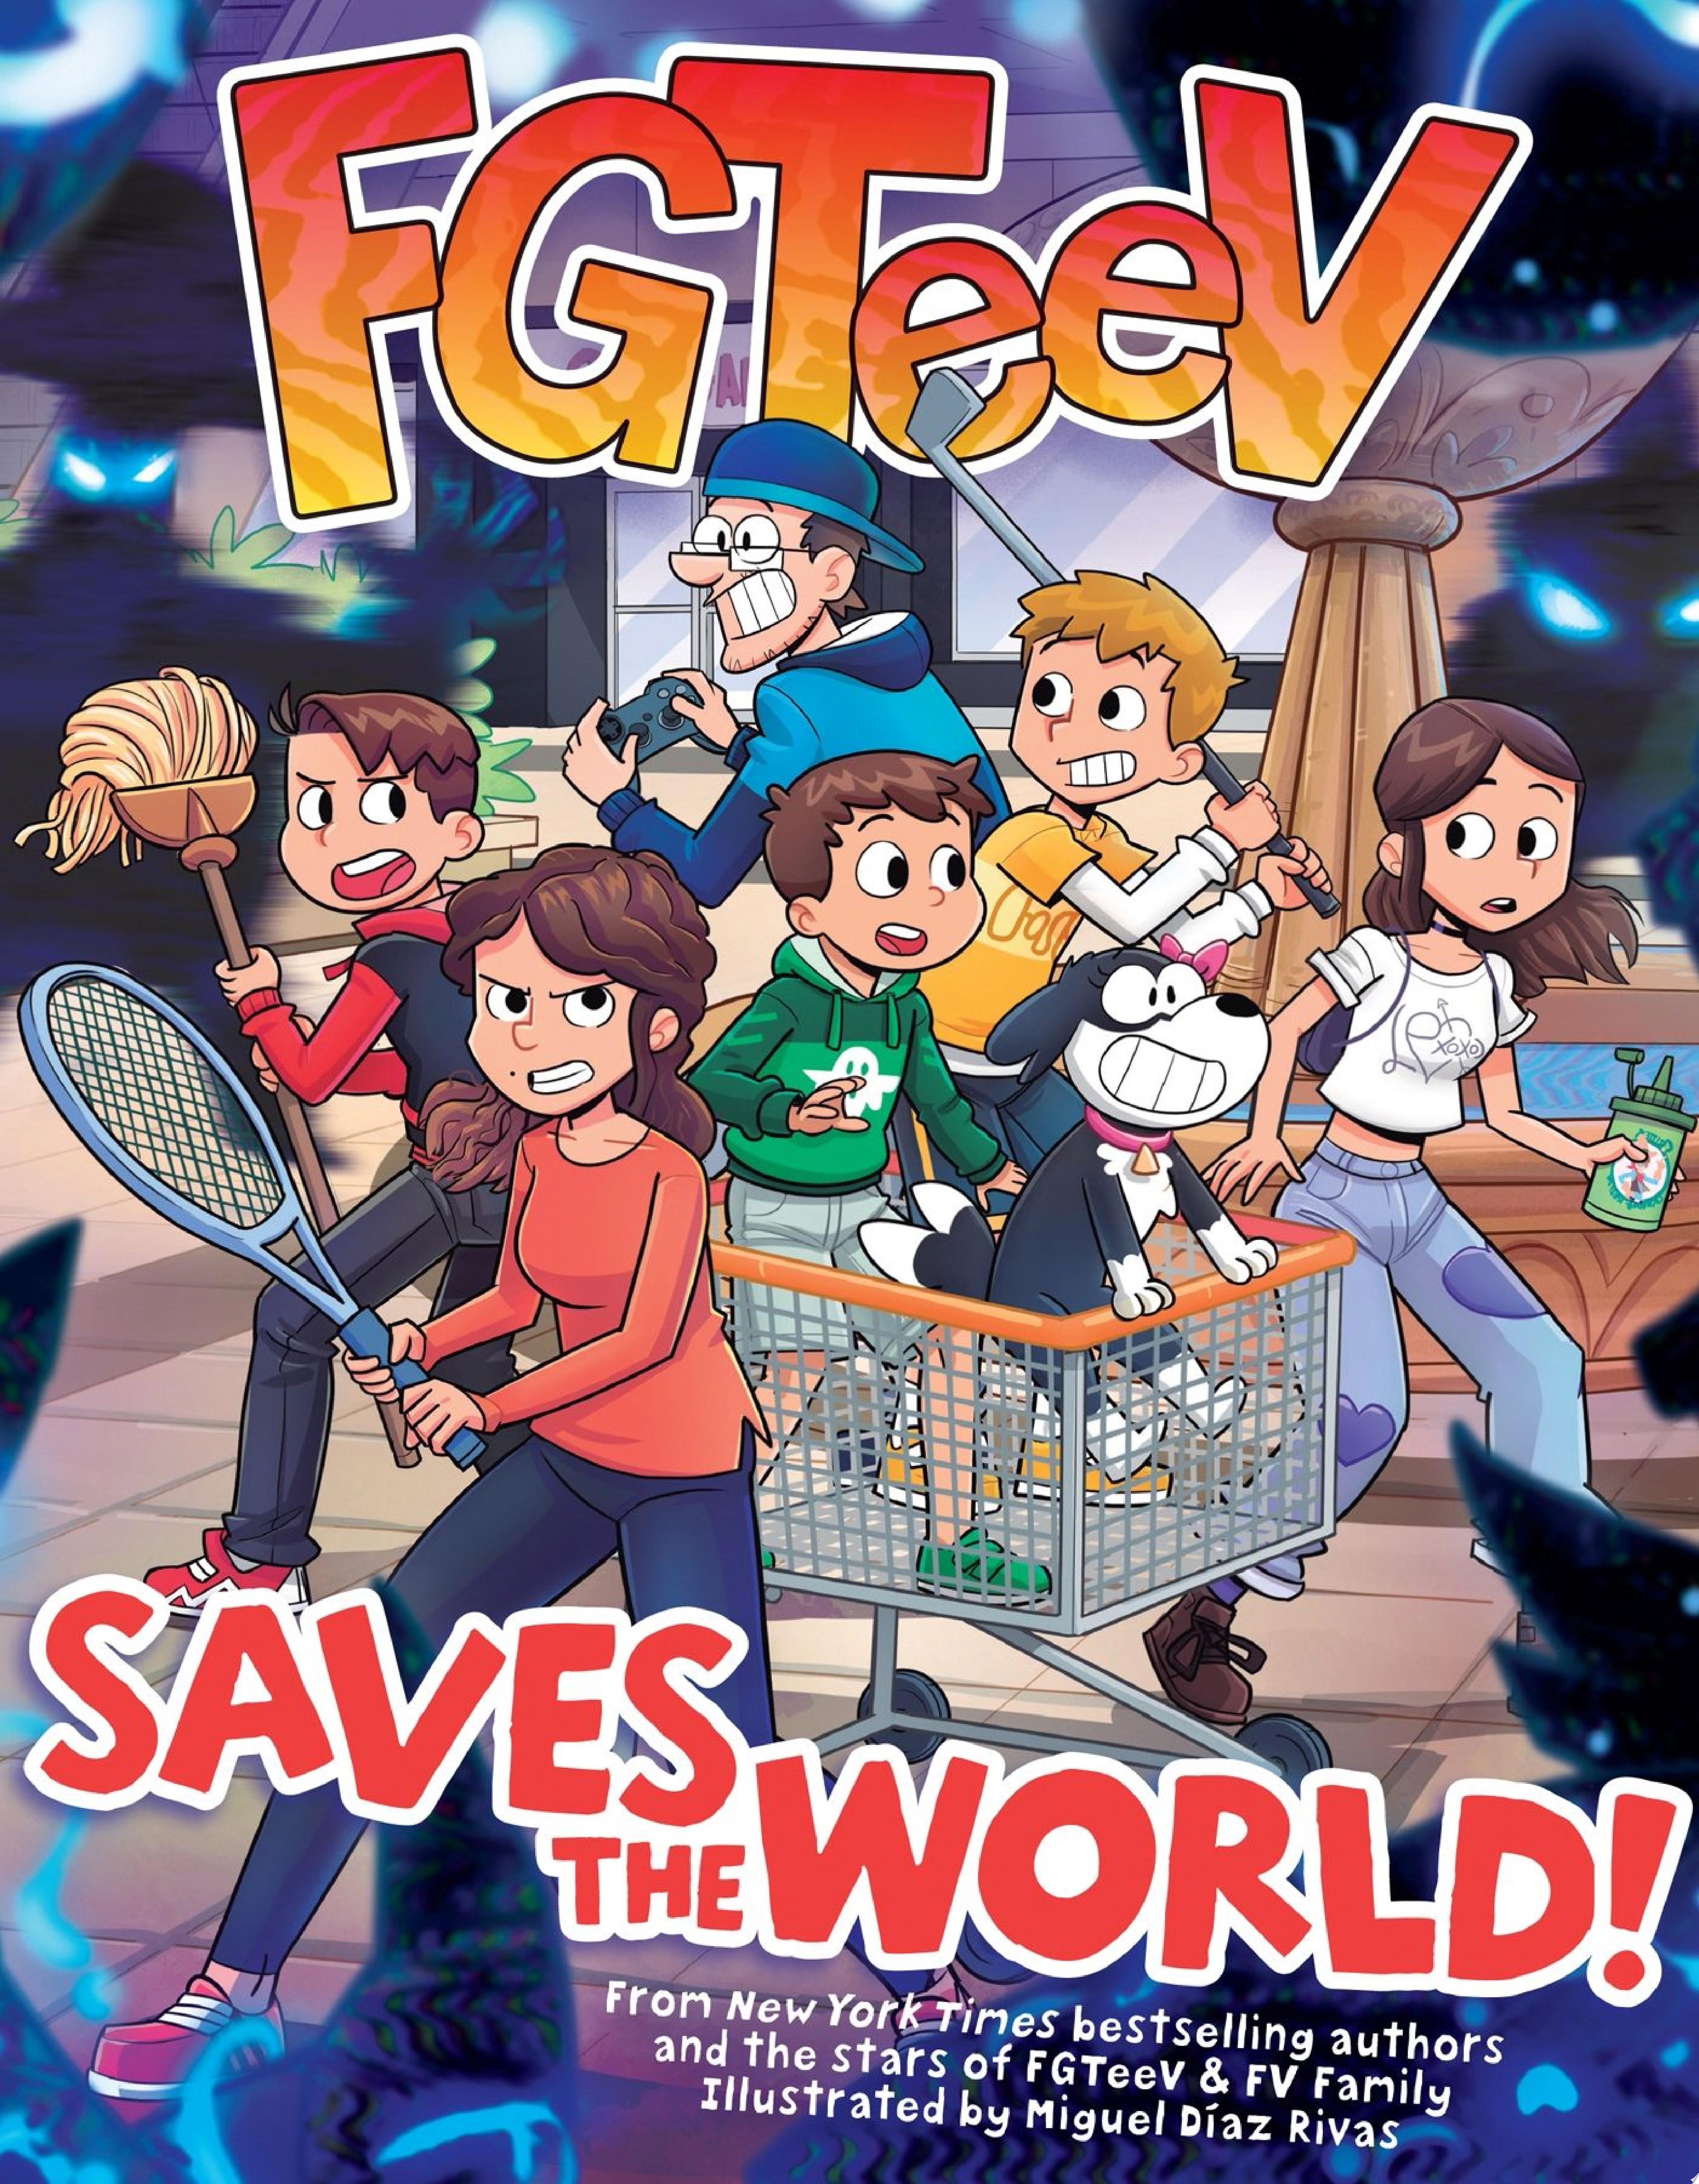 Image for "FGTeeV Saves the World!"